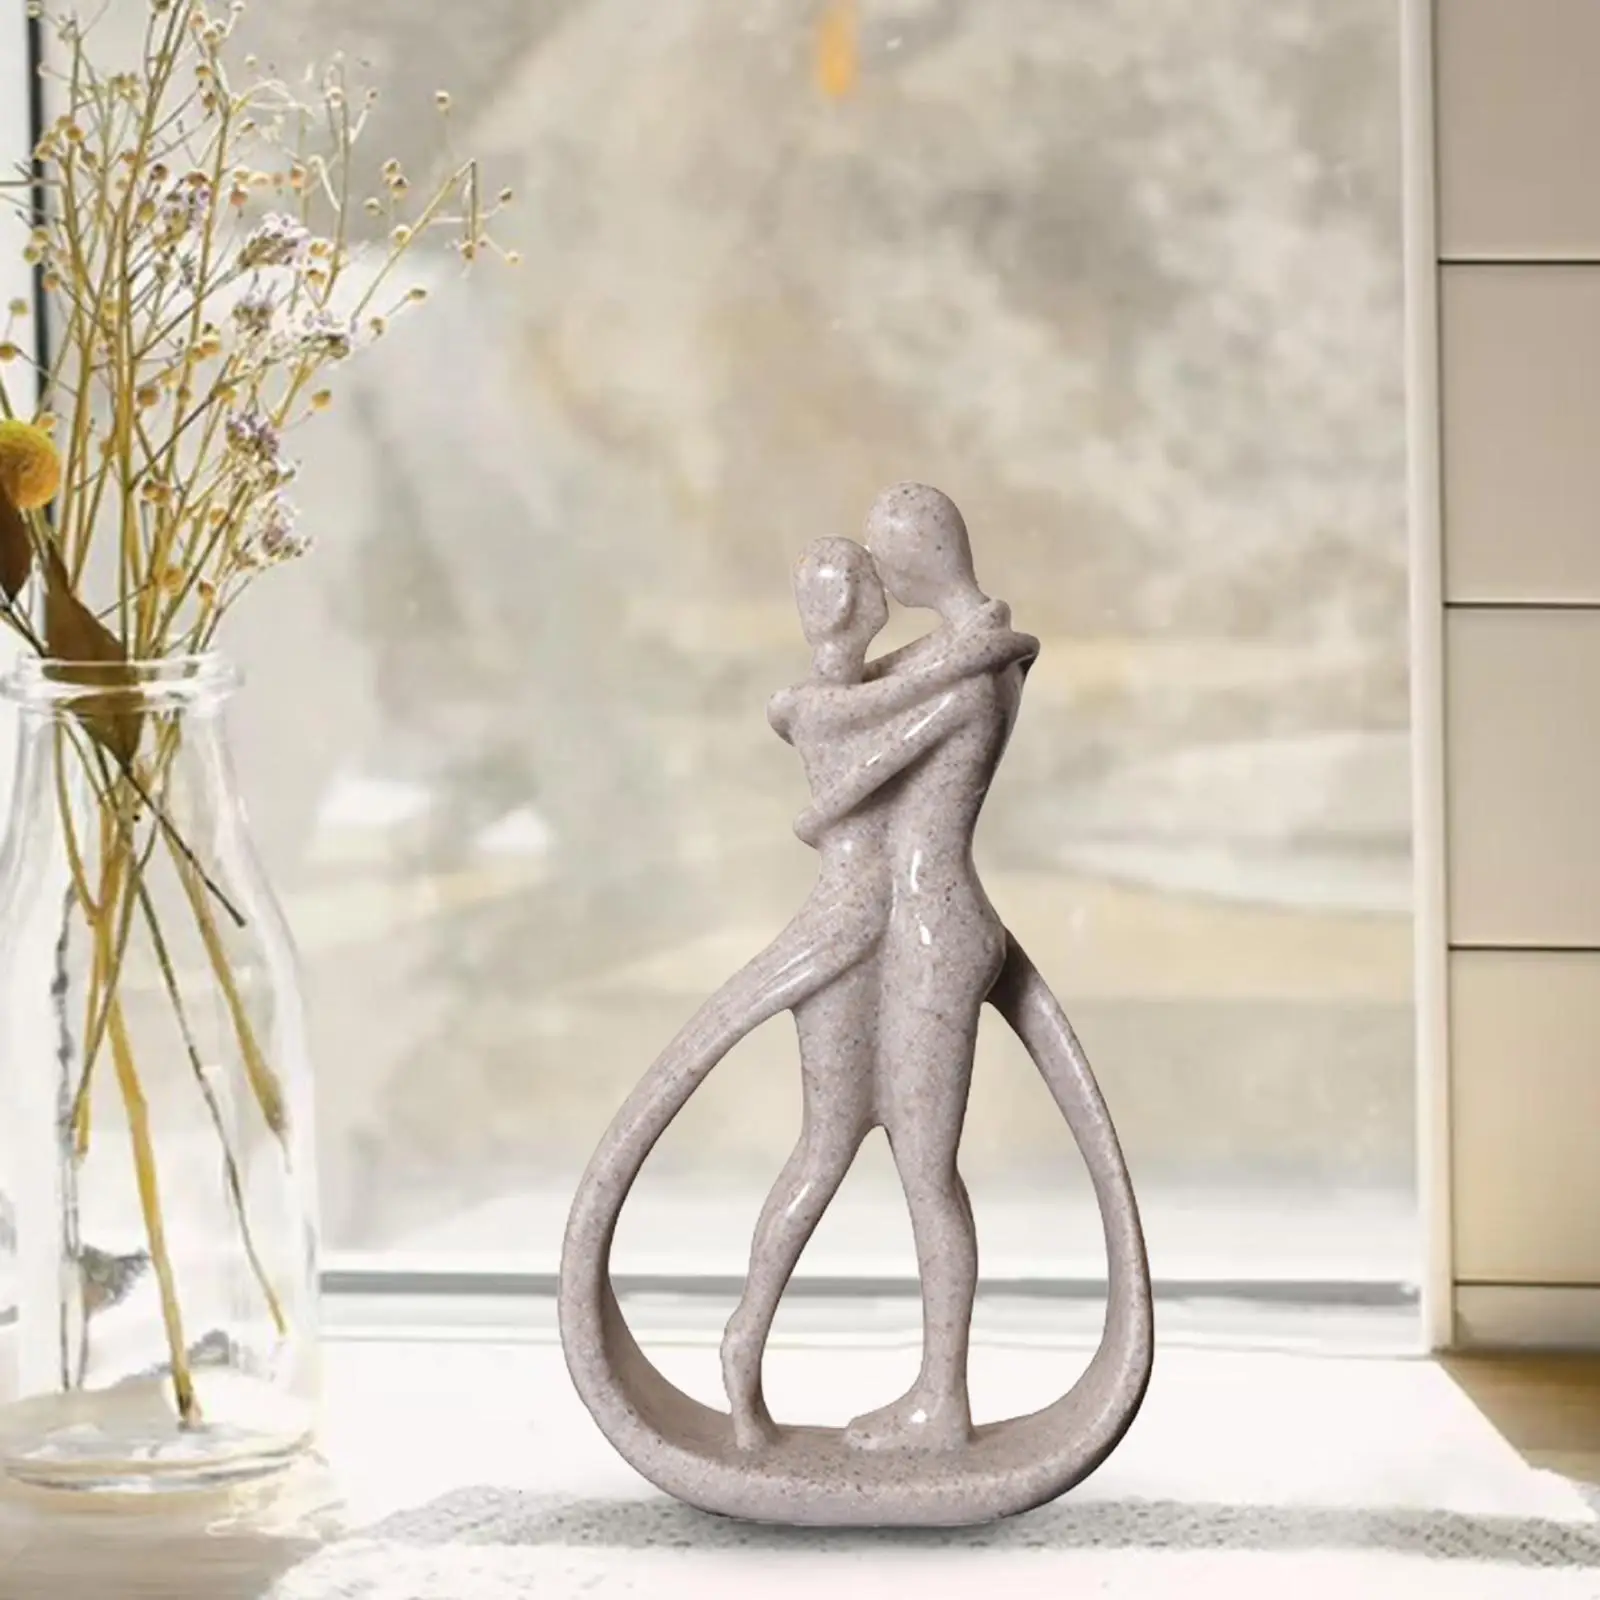 Couple Statue Romantic Modern Desktop Ornament for Office Desk Home Decor